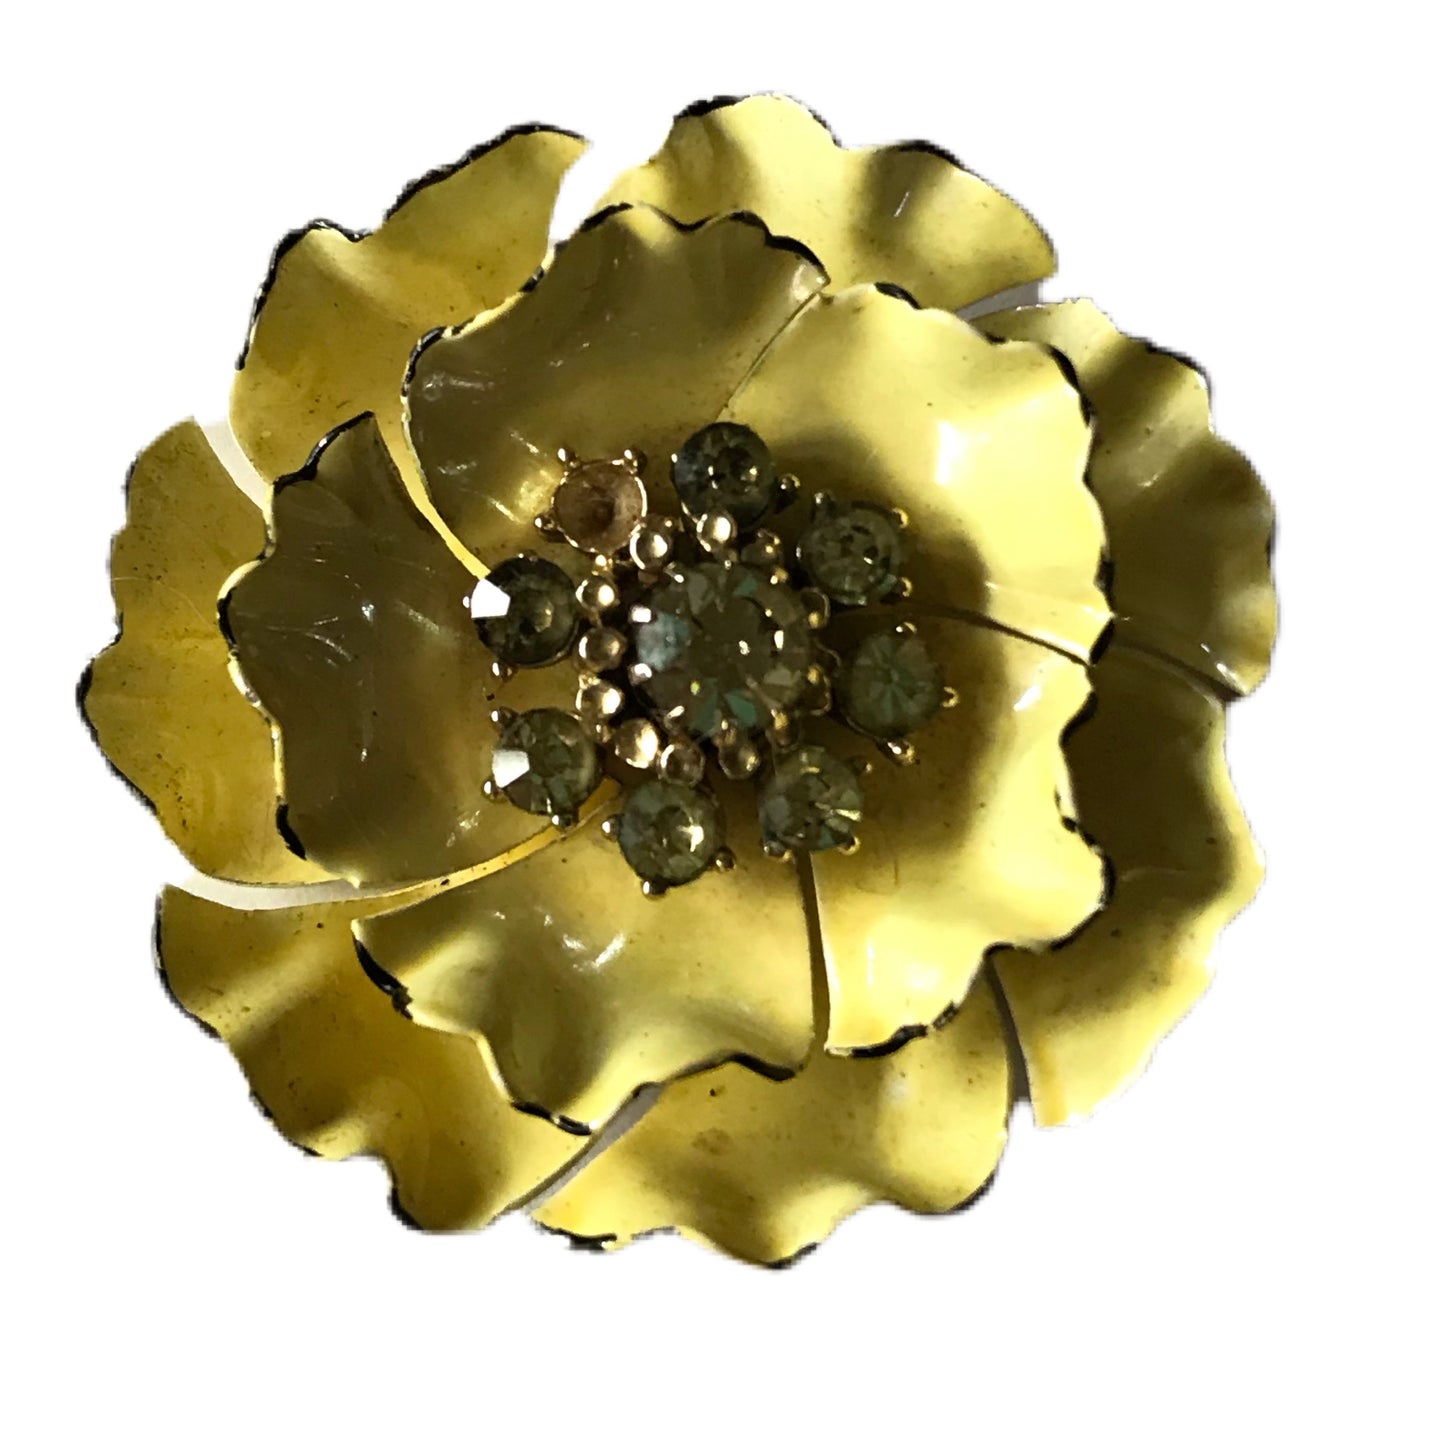 Rhinestone Centered Pale Yellow Enameled Metal Flower Brooch circa 1960s